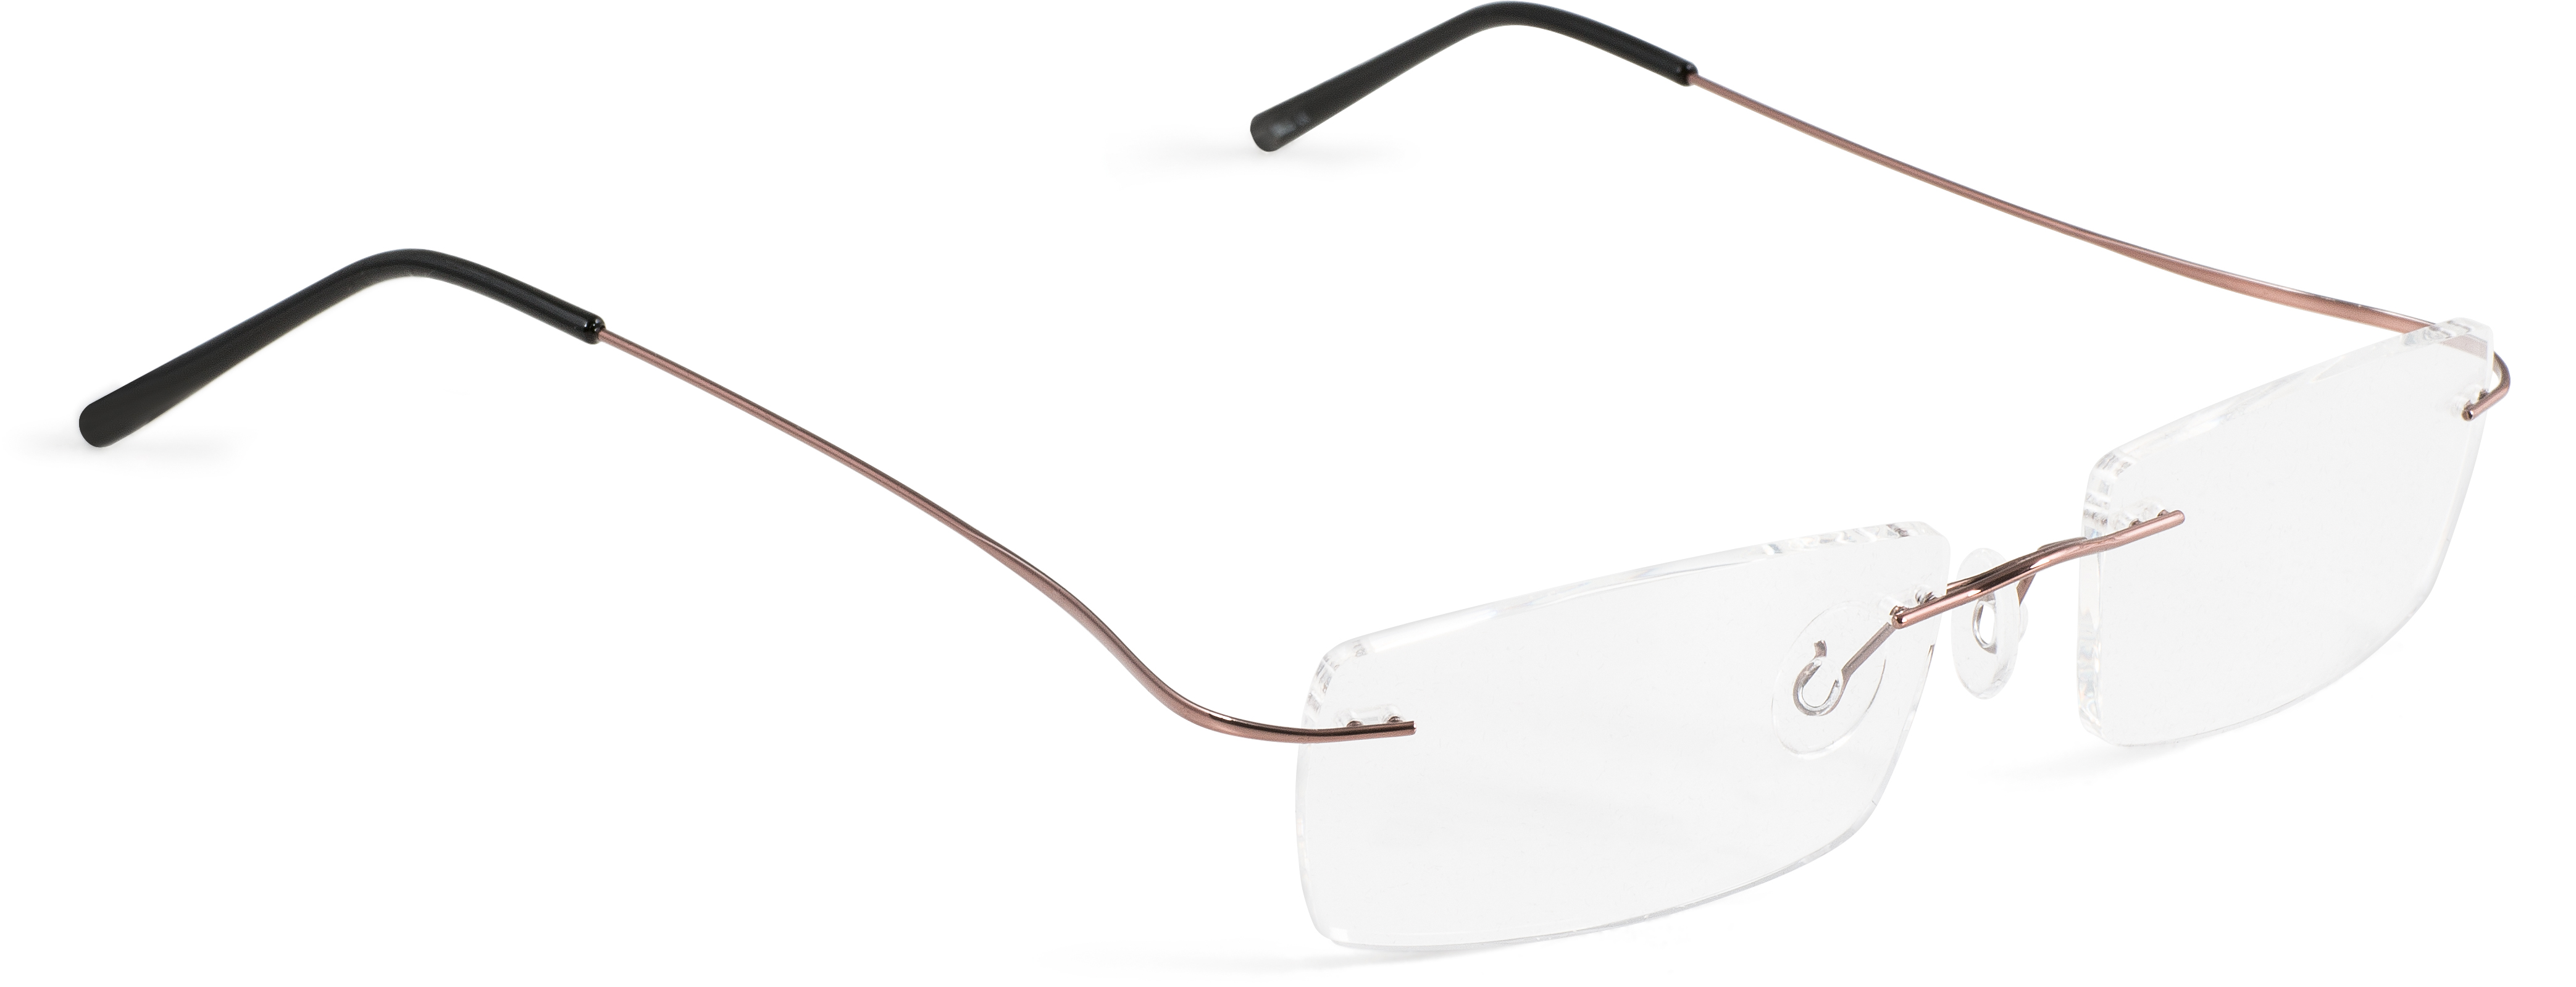 Hülsenbohrbrille Monoblockbügel, Braun